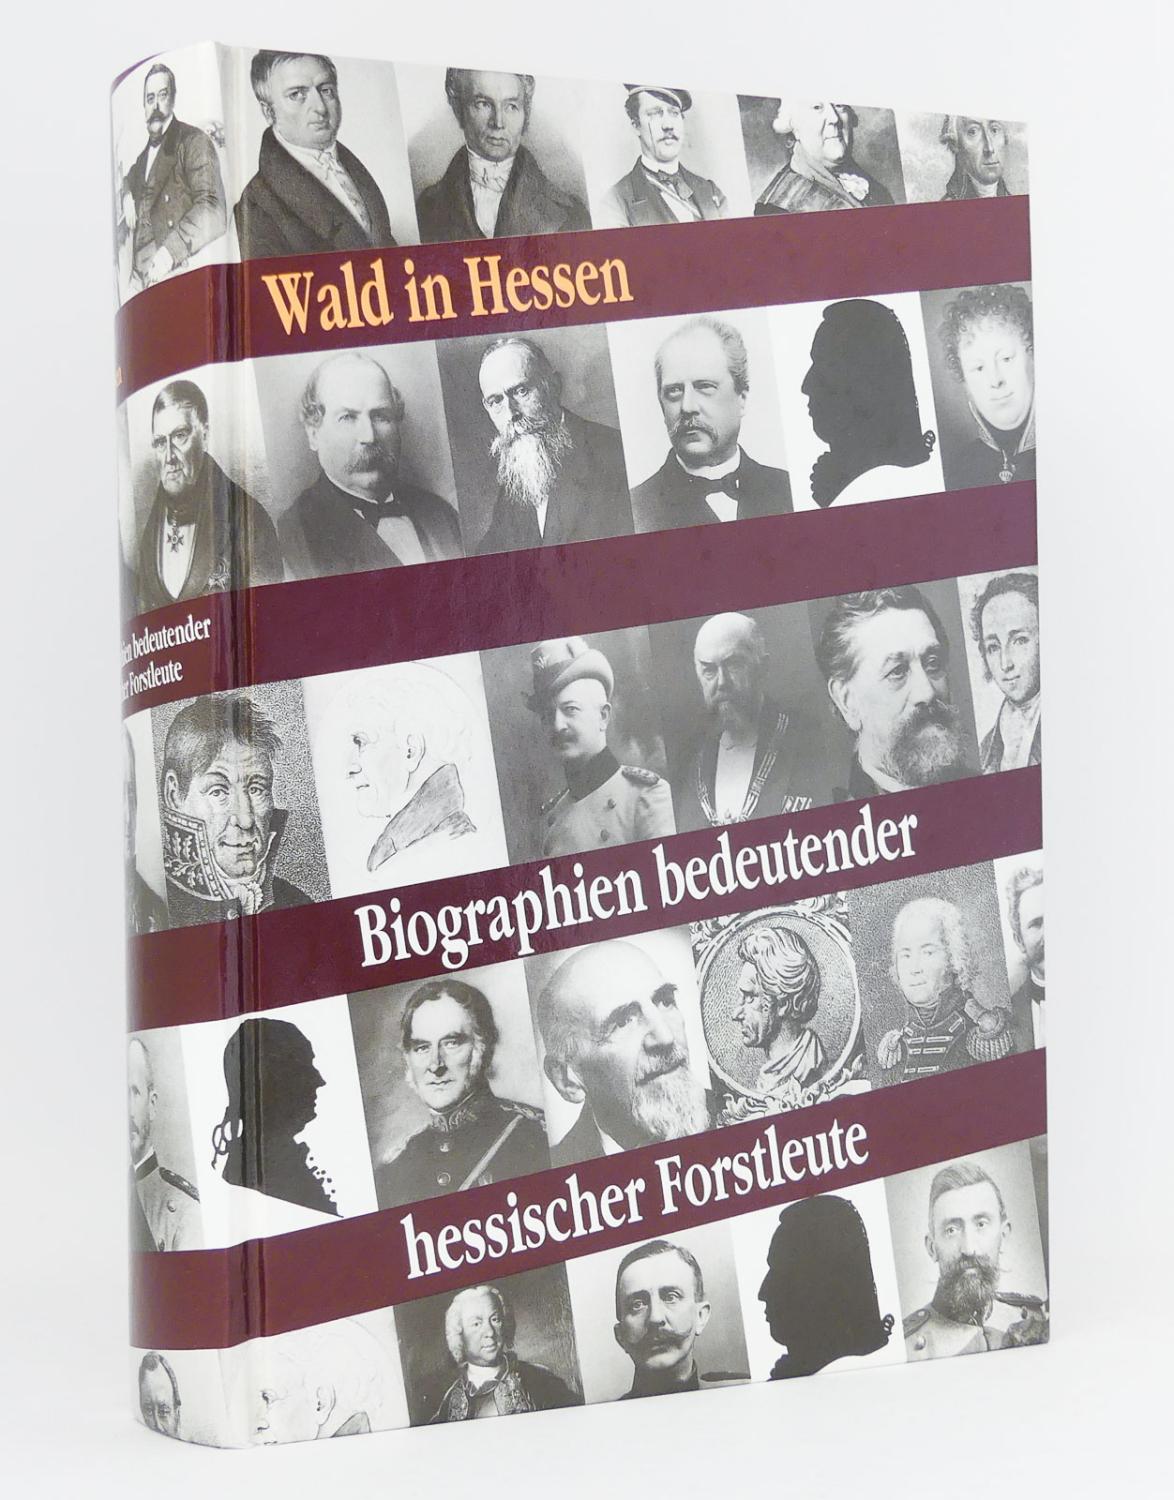 Biographien bedeutender hessischer Forstleute - Georg-Ludwig-Hartig-Stiftung